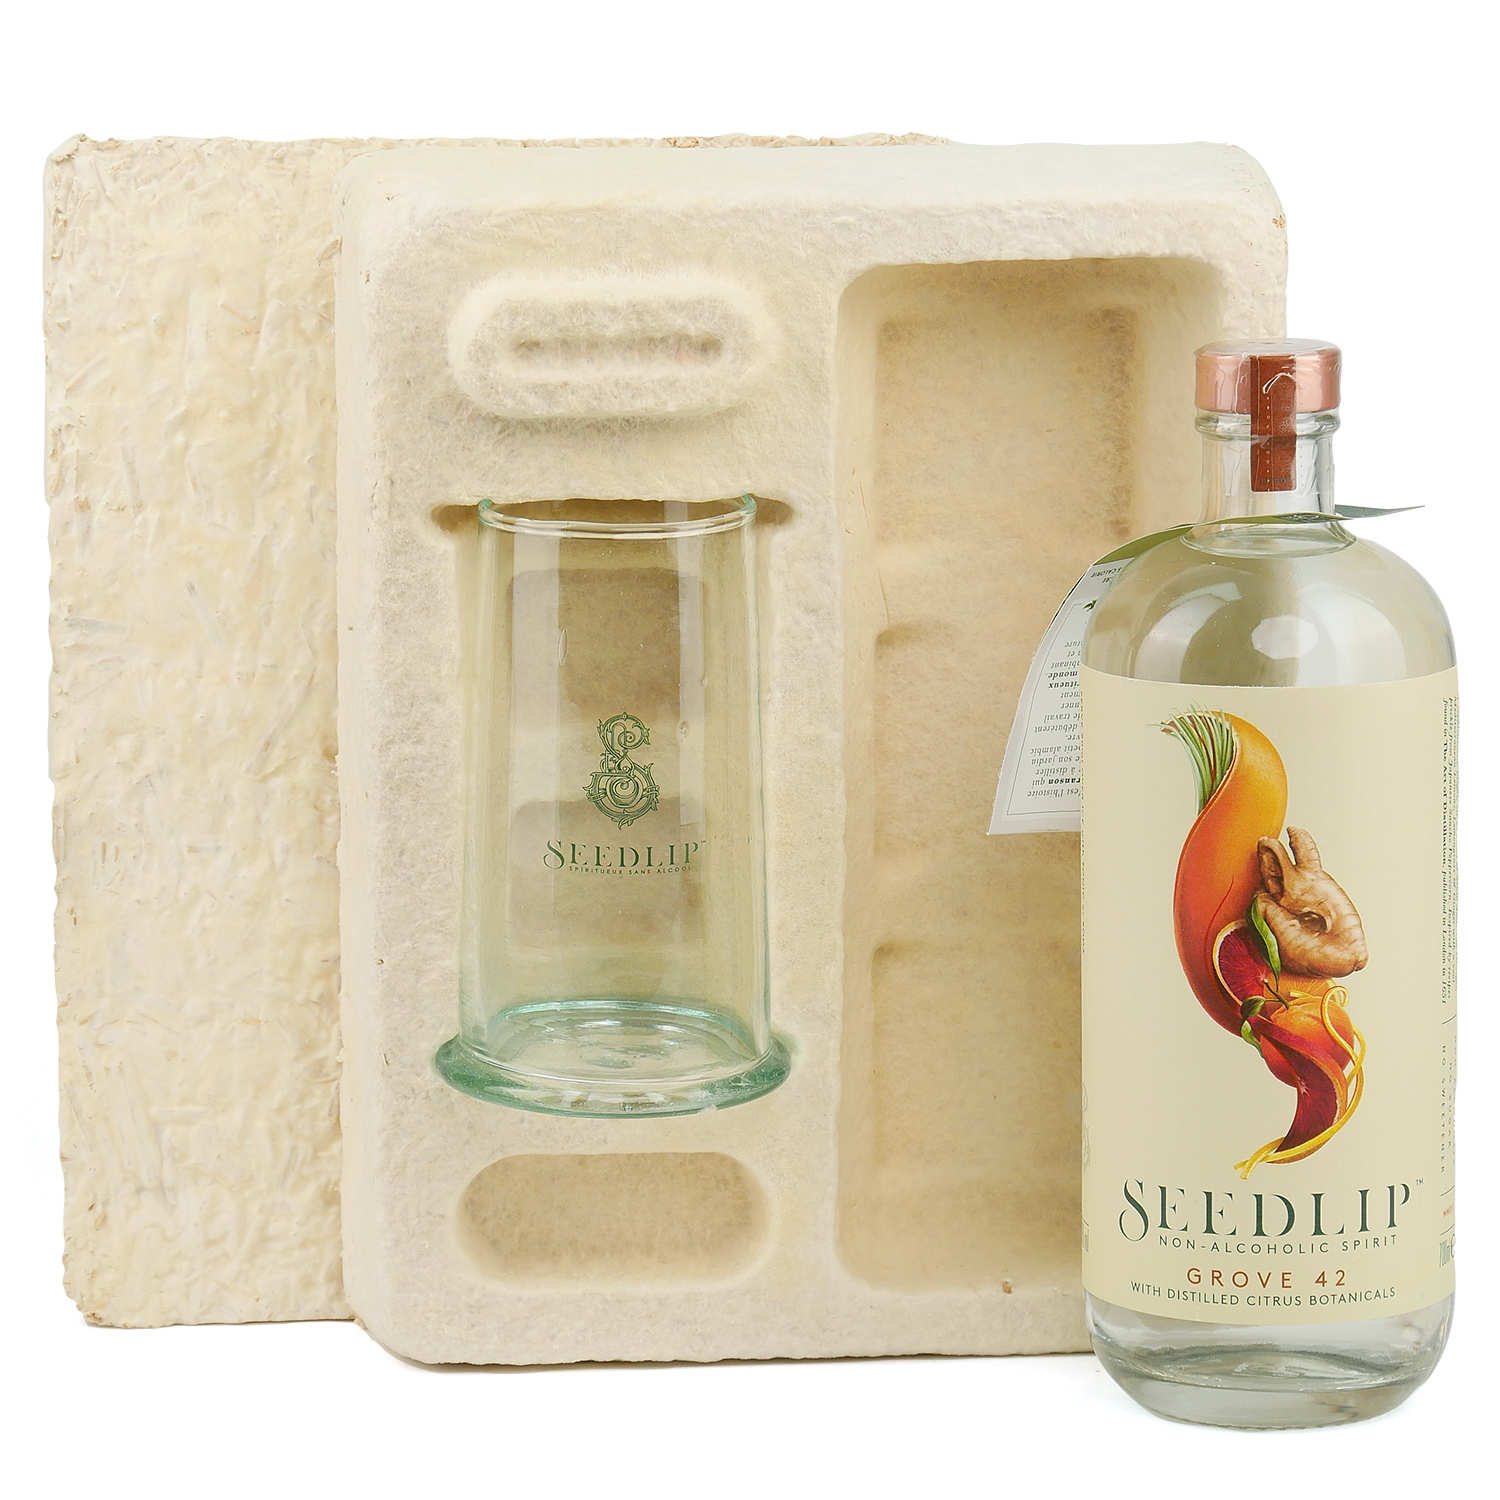 Seedlip 42 Gift - With 1 Glass Grove - Seedlip Box